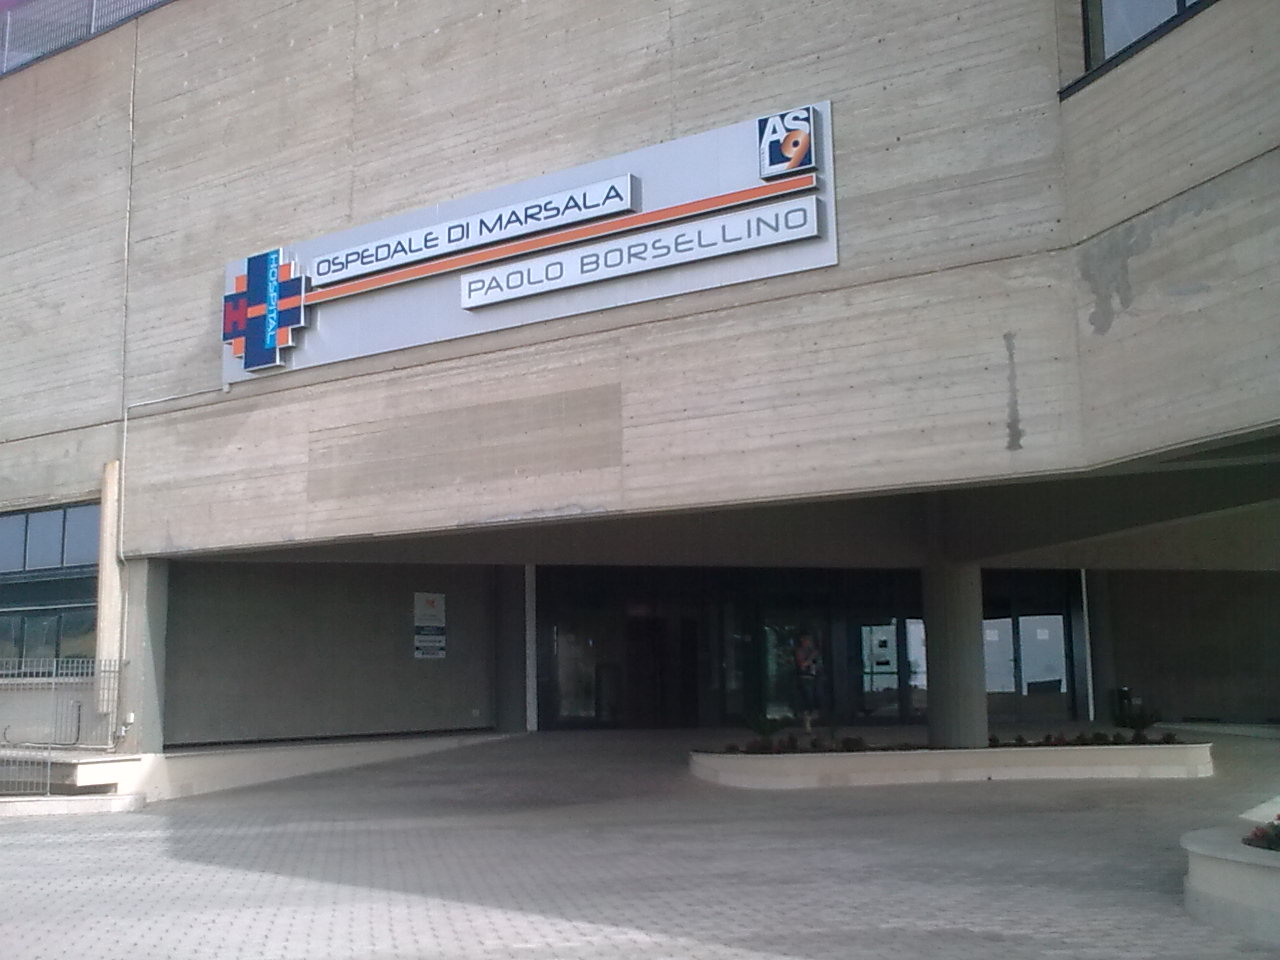 Ospedale Paolo Borsellino